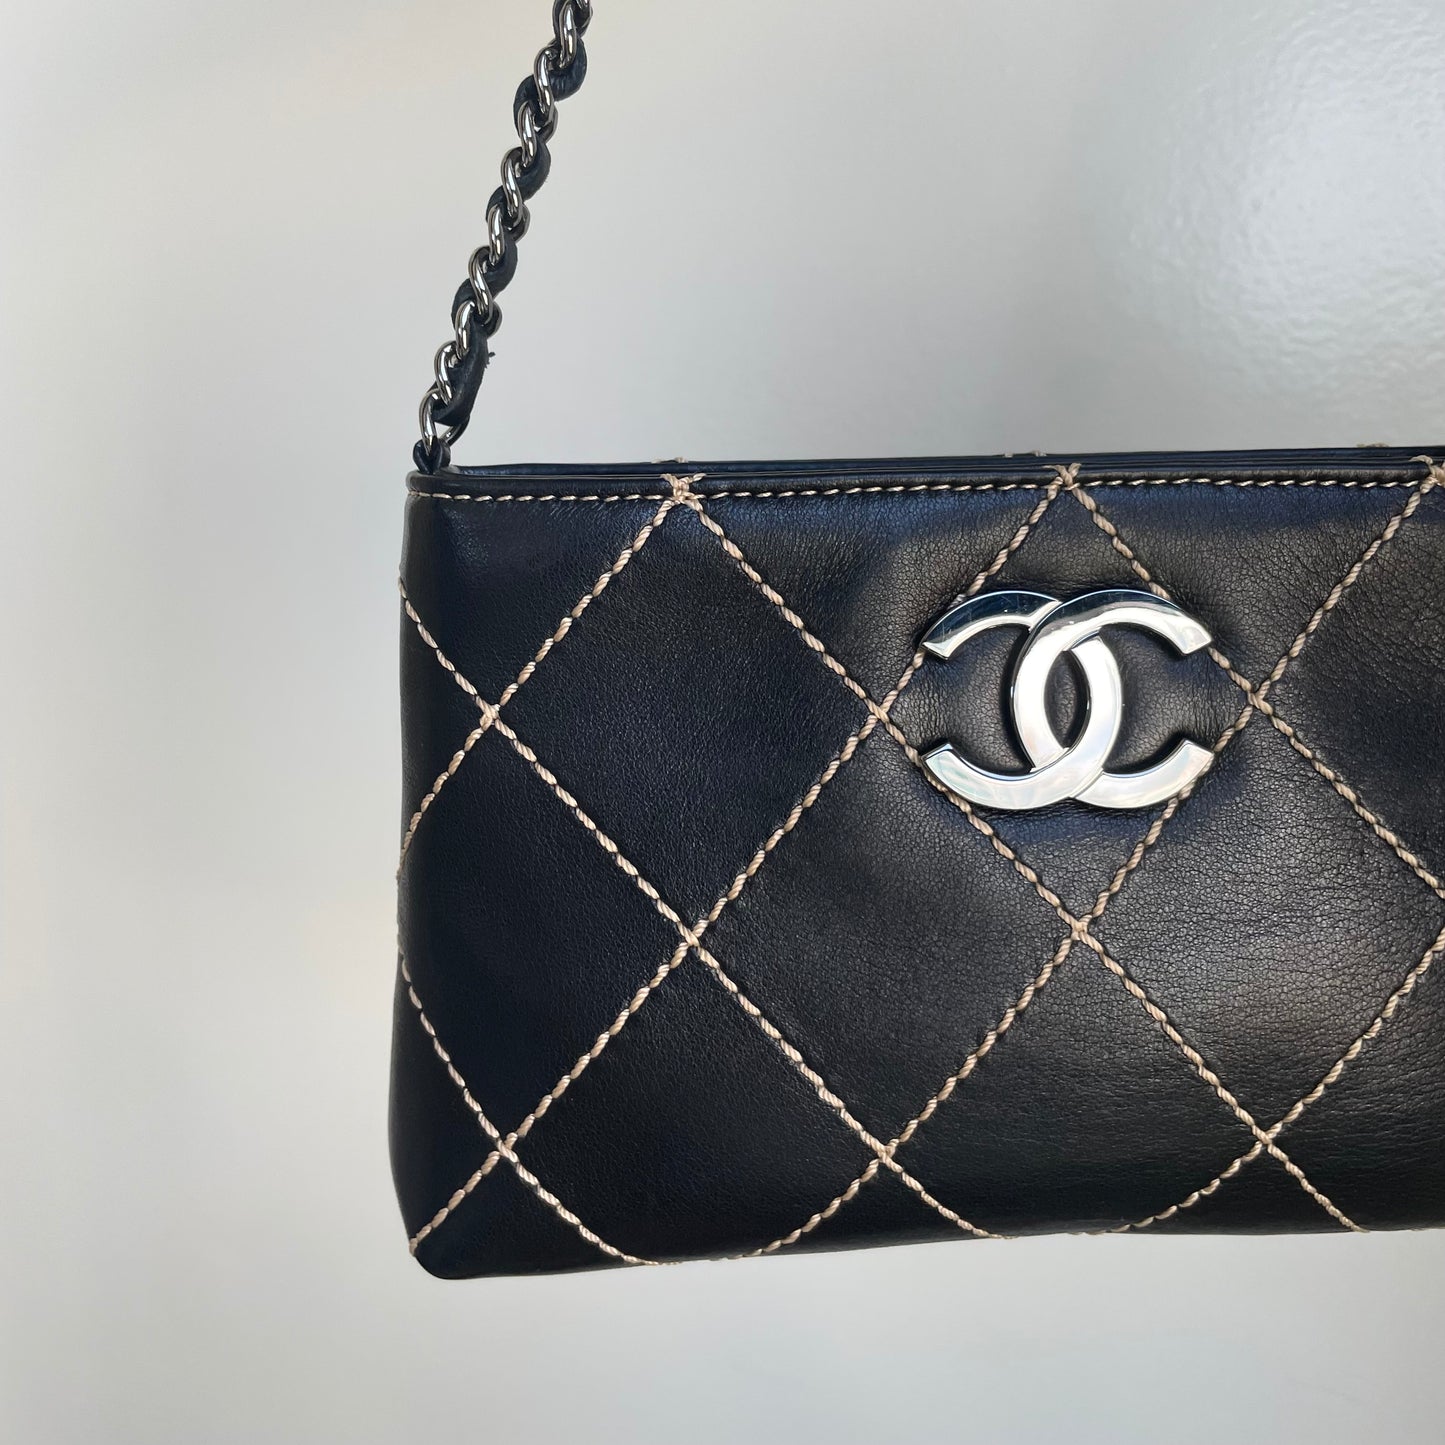 Chanel Beige Quilted Leather Wild Stitch Surpique Flap Bag